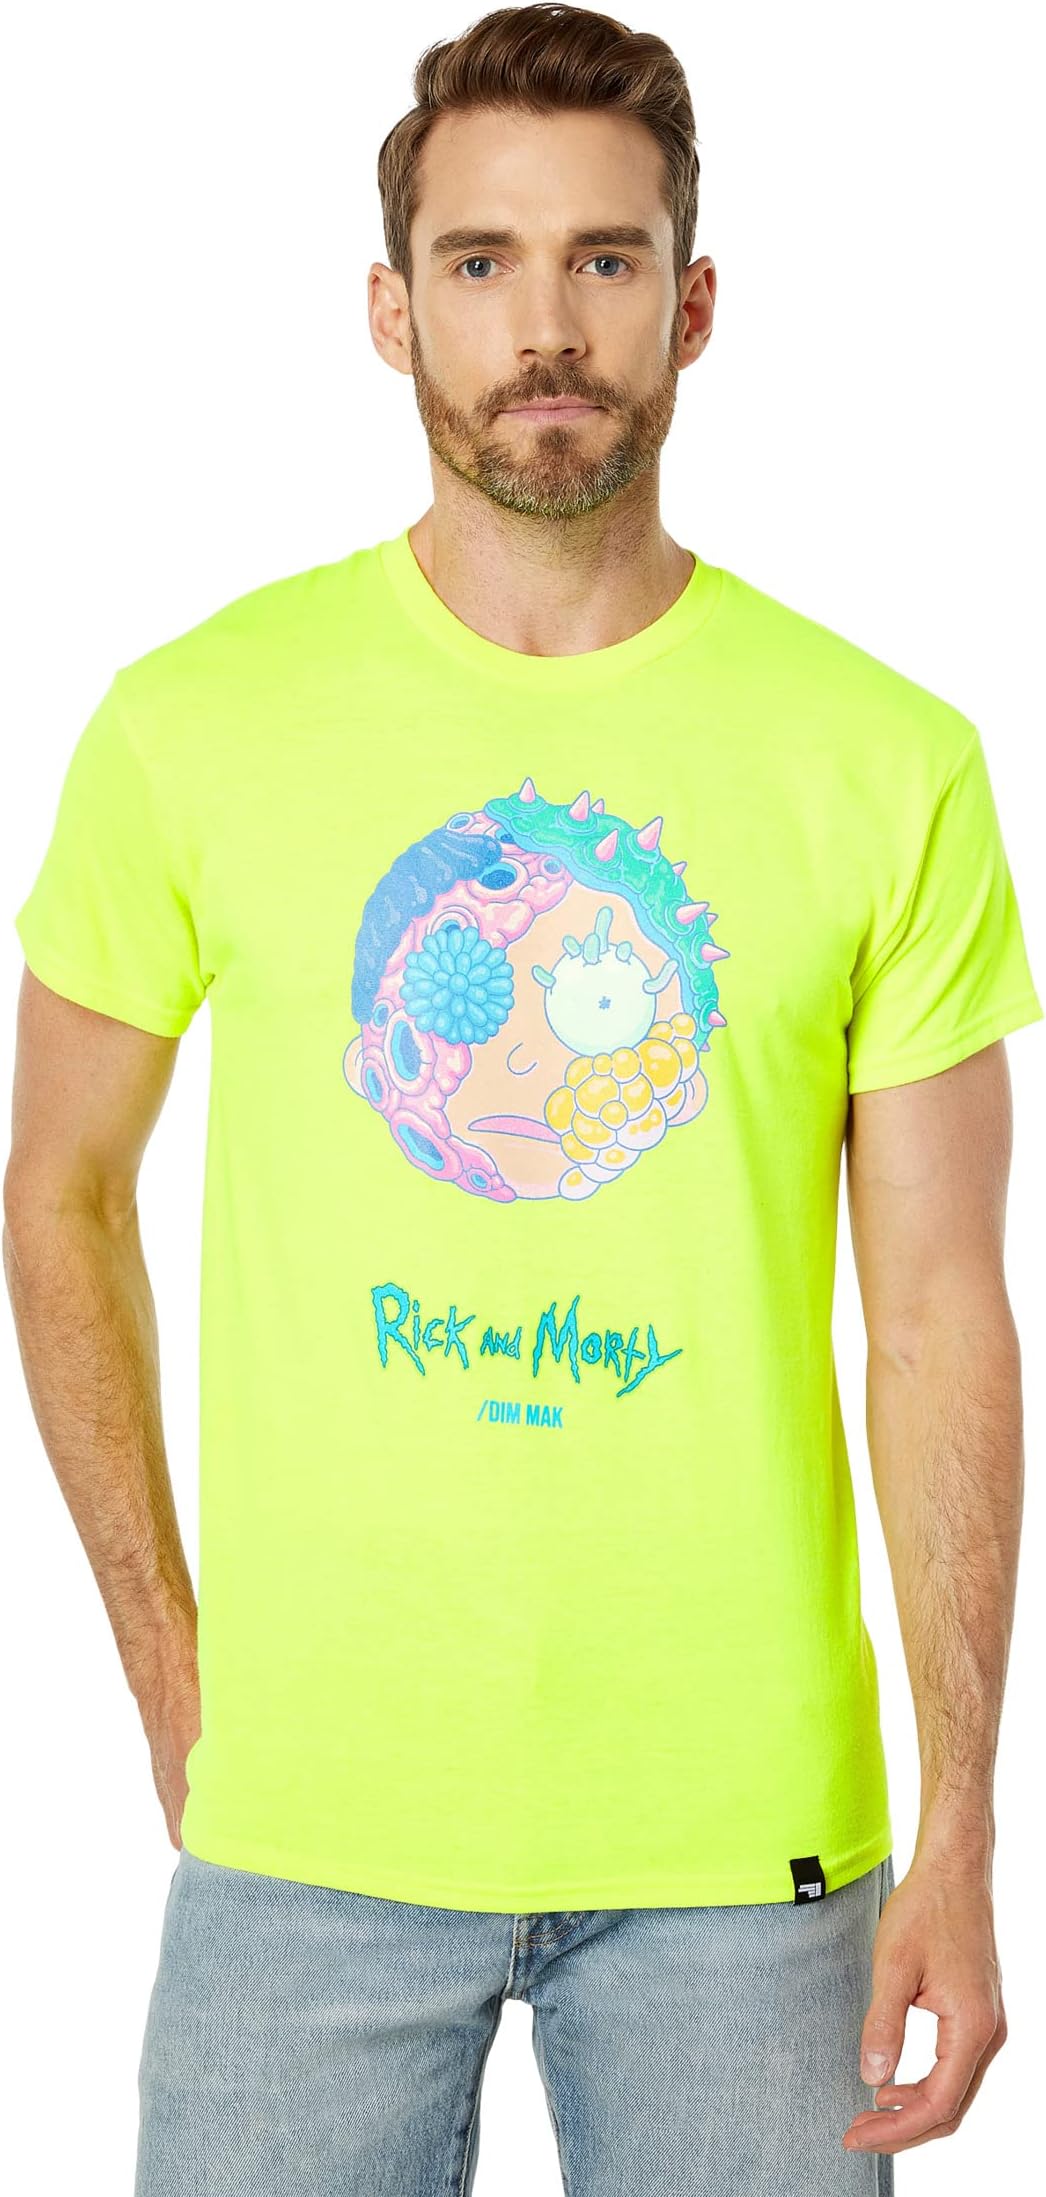 Dim Mak x Rick and Morty - футболка Морти, цвет Safety Green набор rick and morty блокнот морти смит кардхолдер чёрный